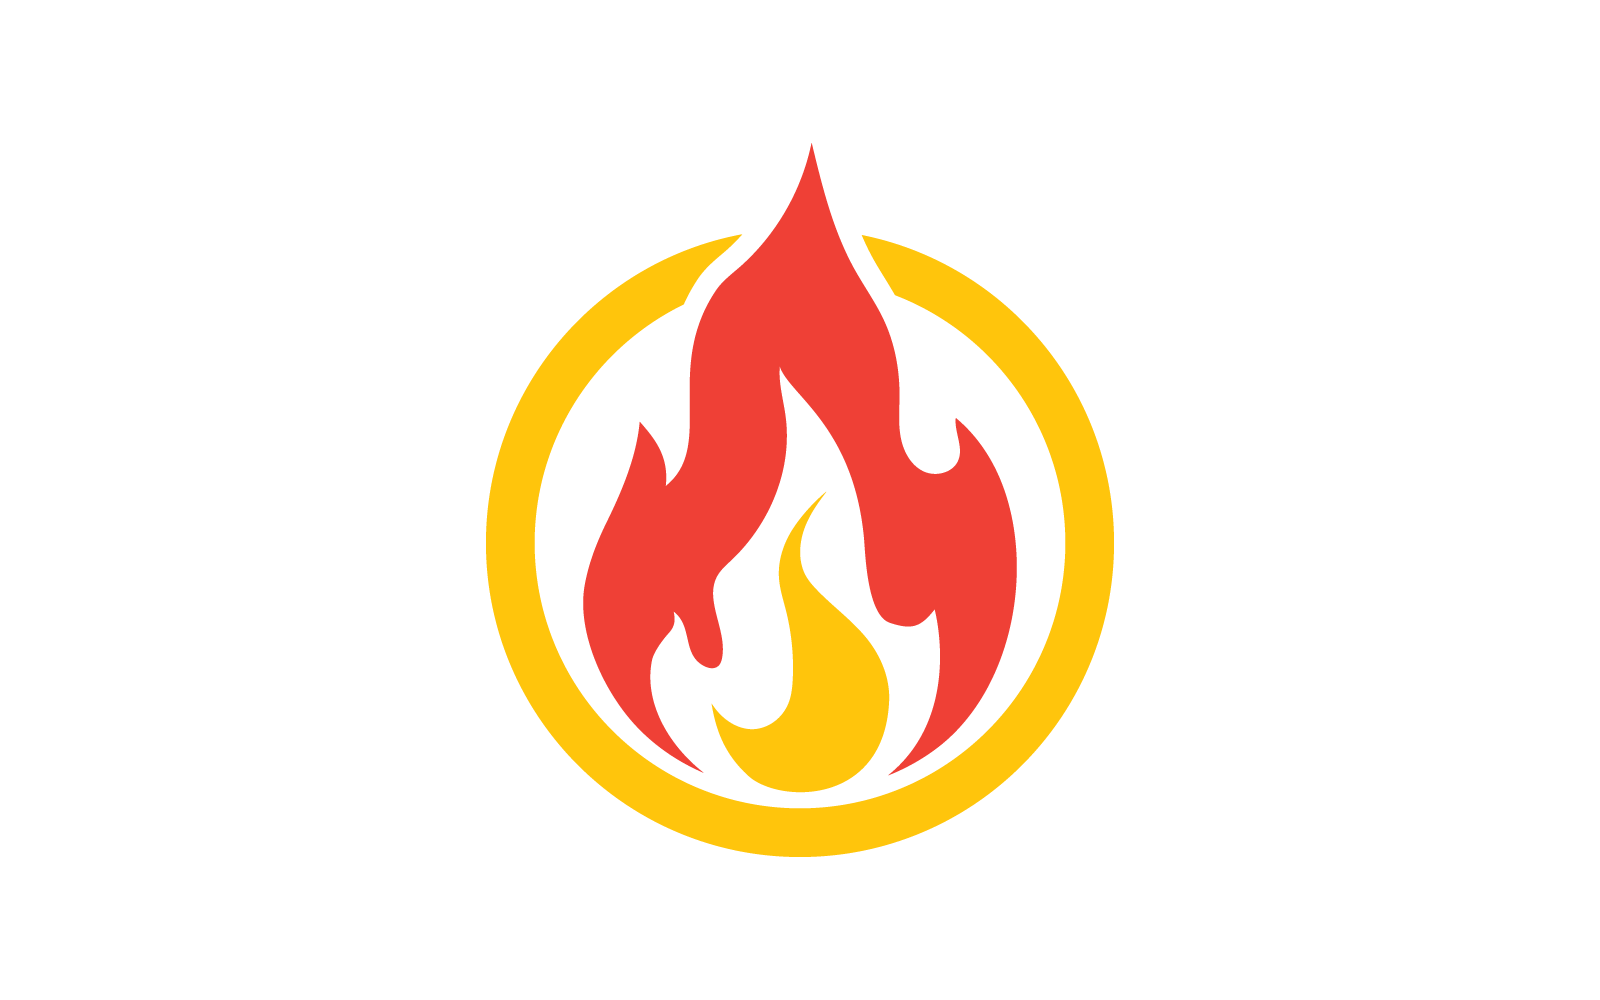 Fire flame vector, Oil, gas and energy logo design concept